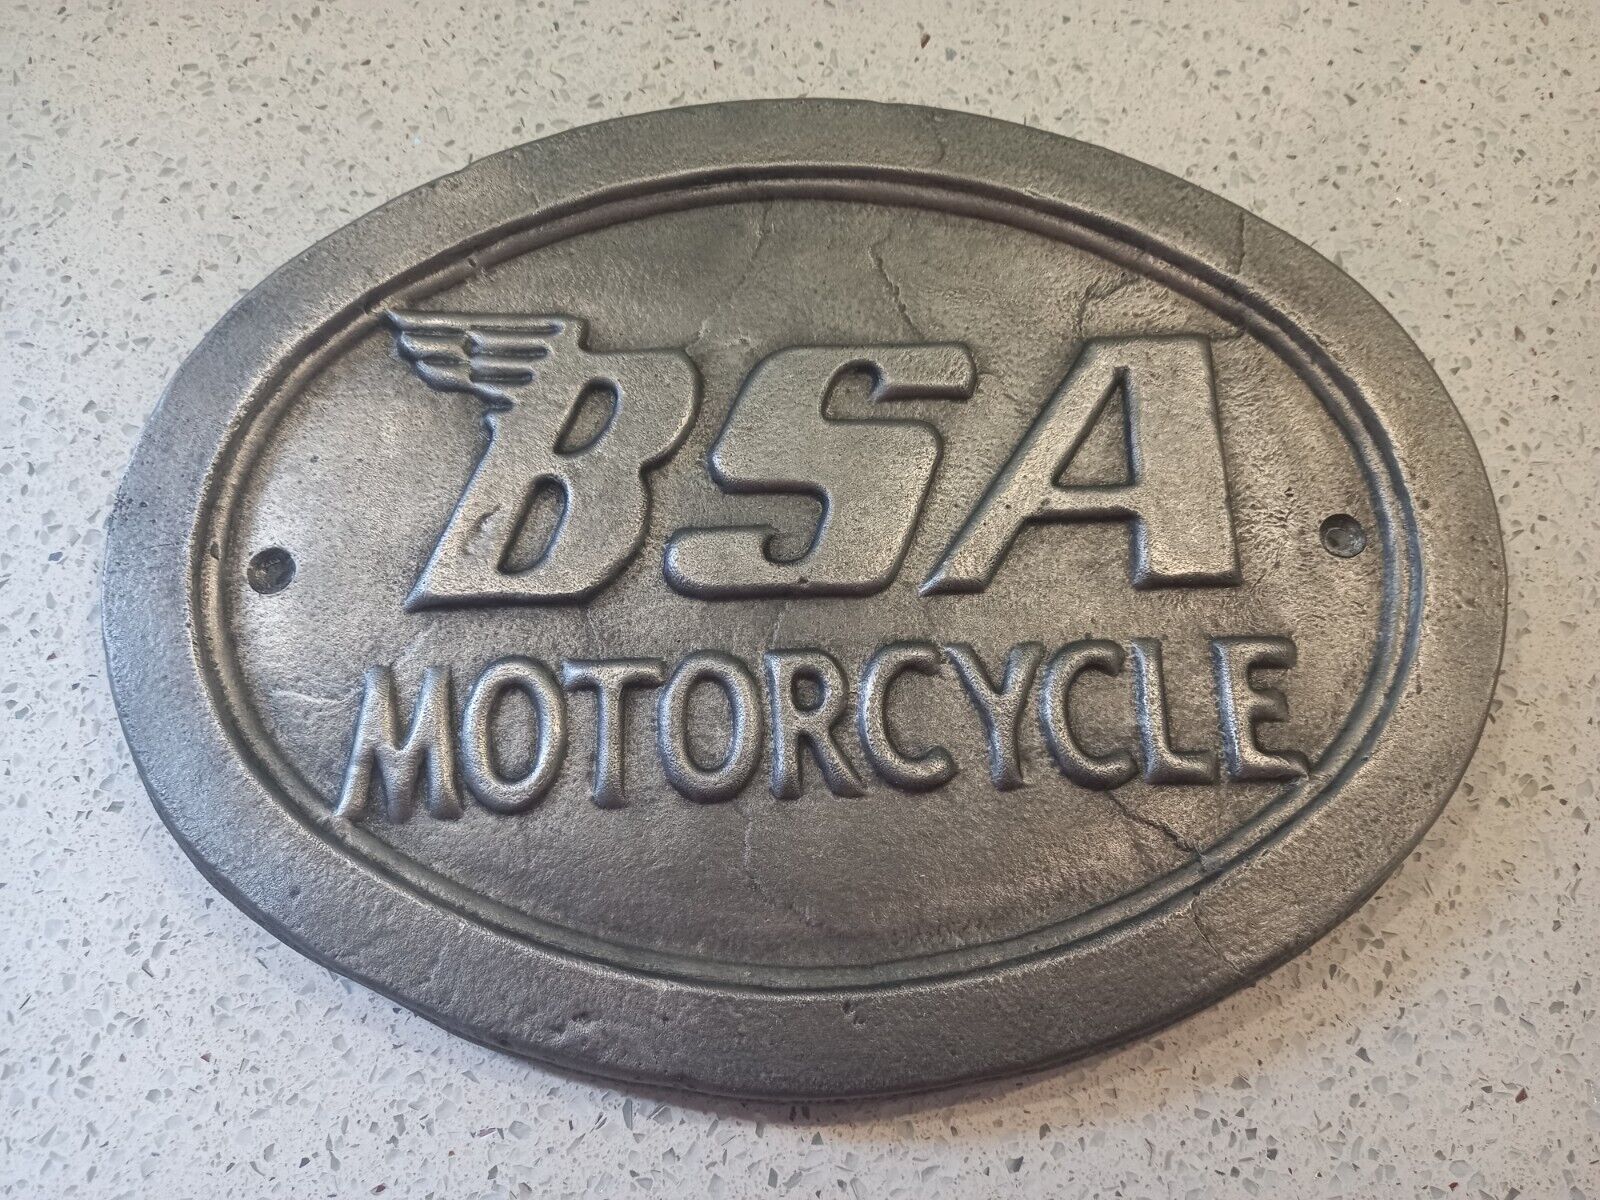 BSA Motorcycle Cast Aluminium Sign Not Cast Iron Garage Decoration Bike Plaque